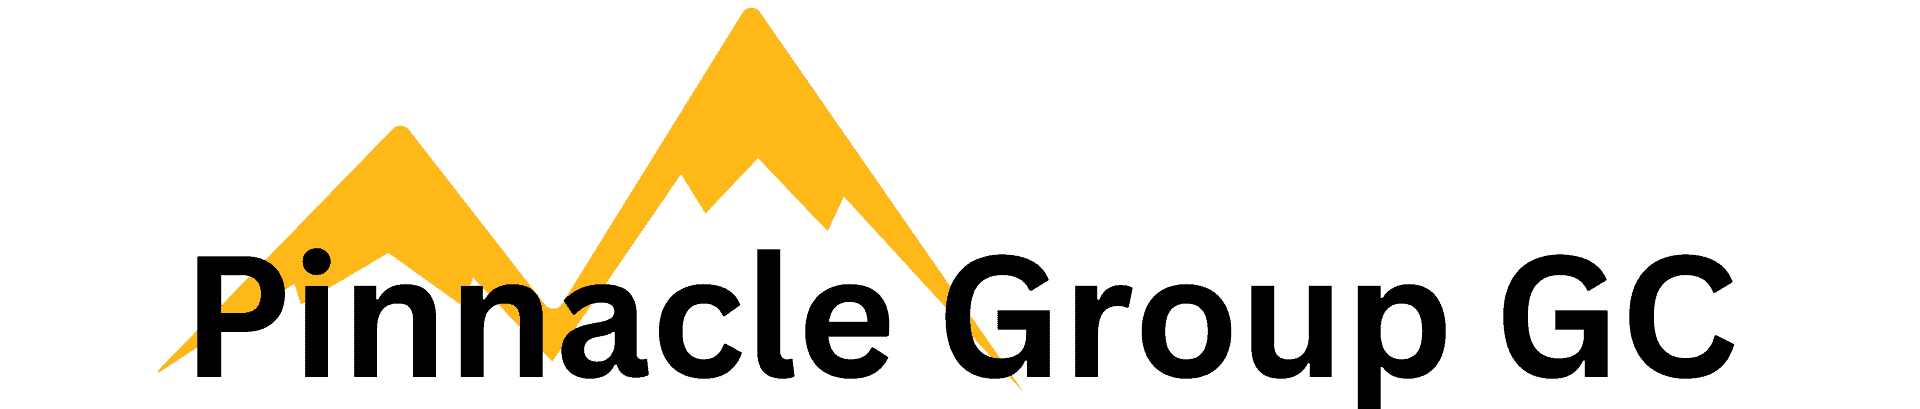 black text pinnacle group logo